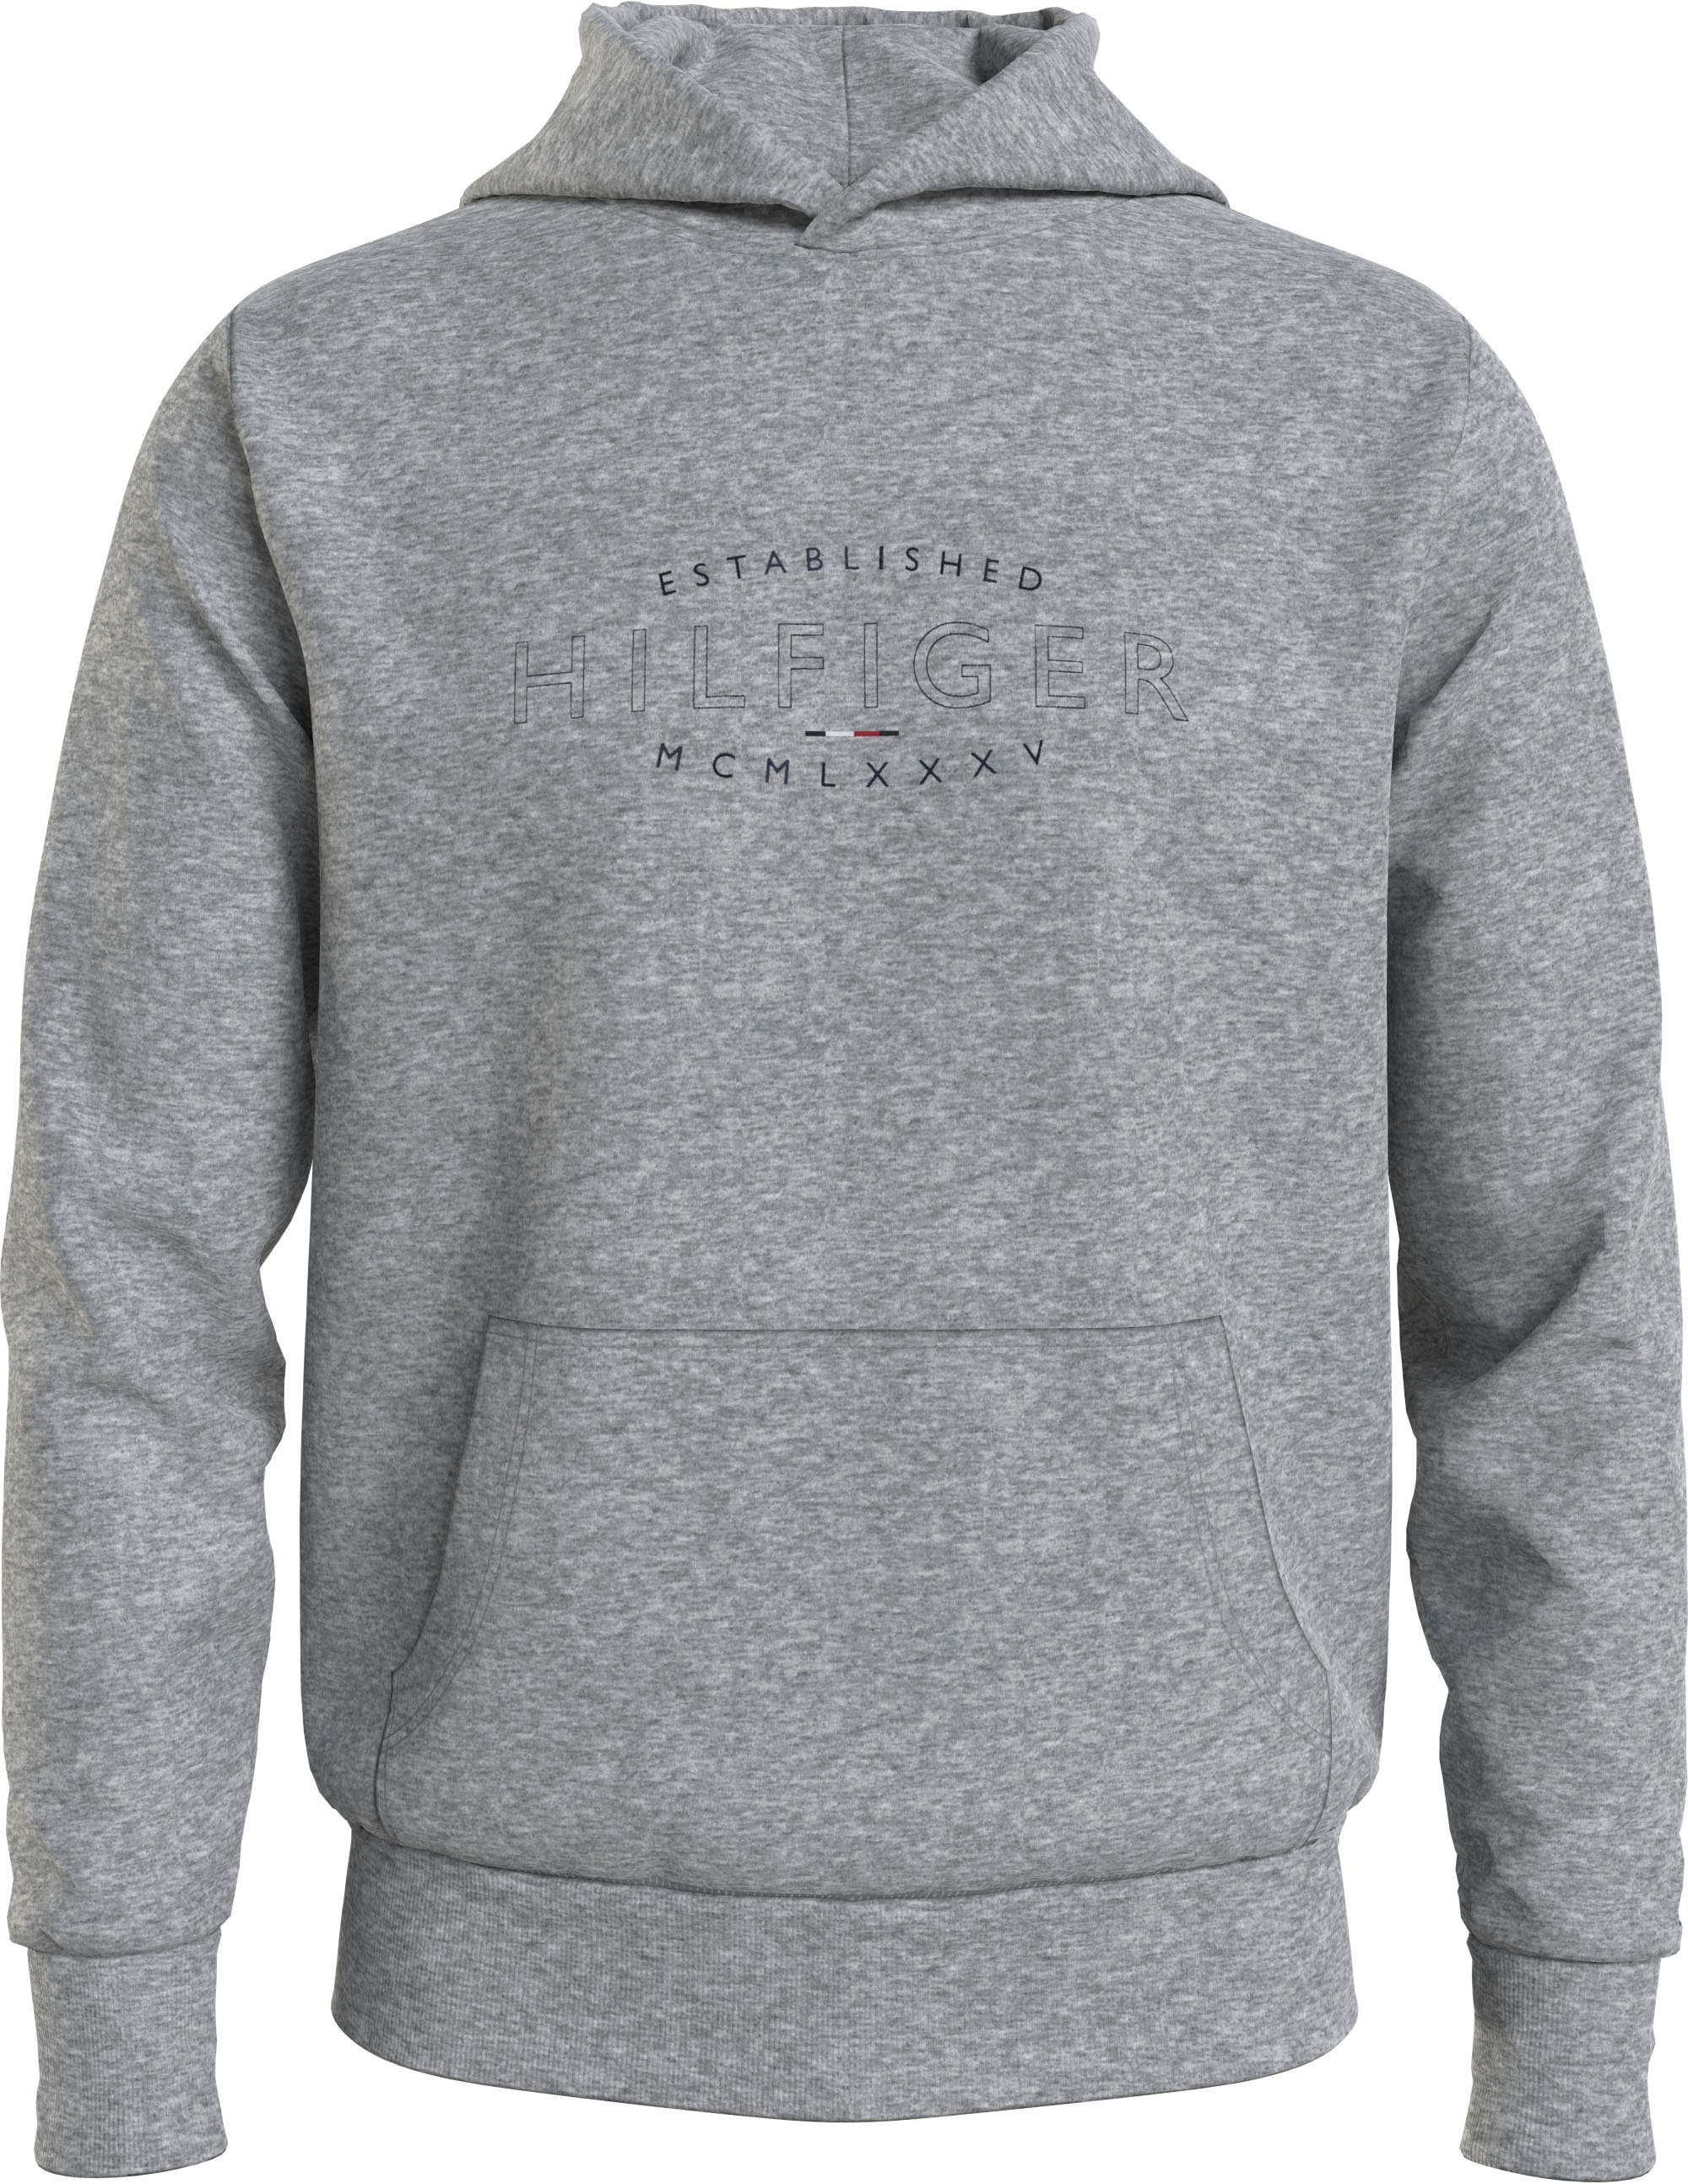 »HILFIGER HOODY« online CURVE Hilfiger bei Kapuzensweatshirt Tommy LOGO OTTO shoppen